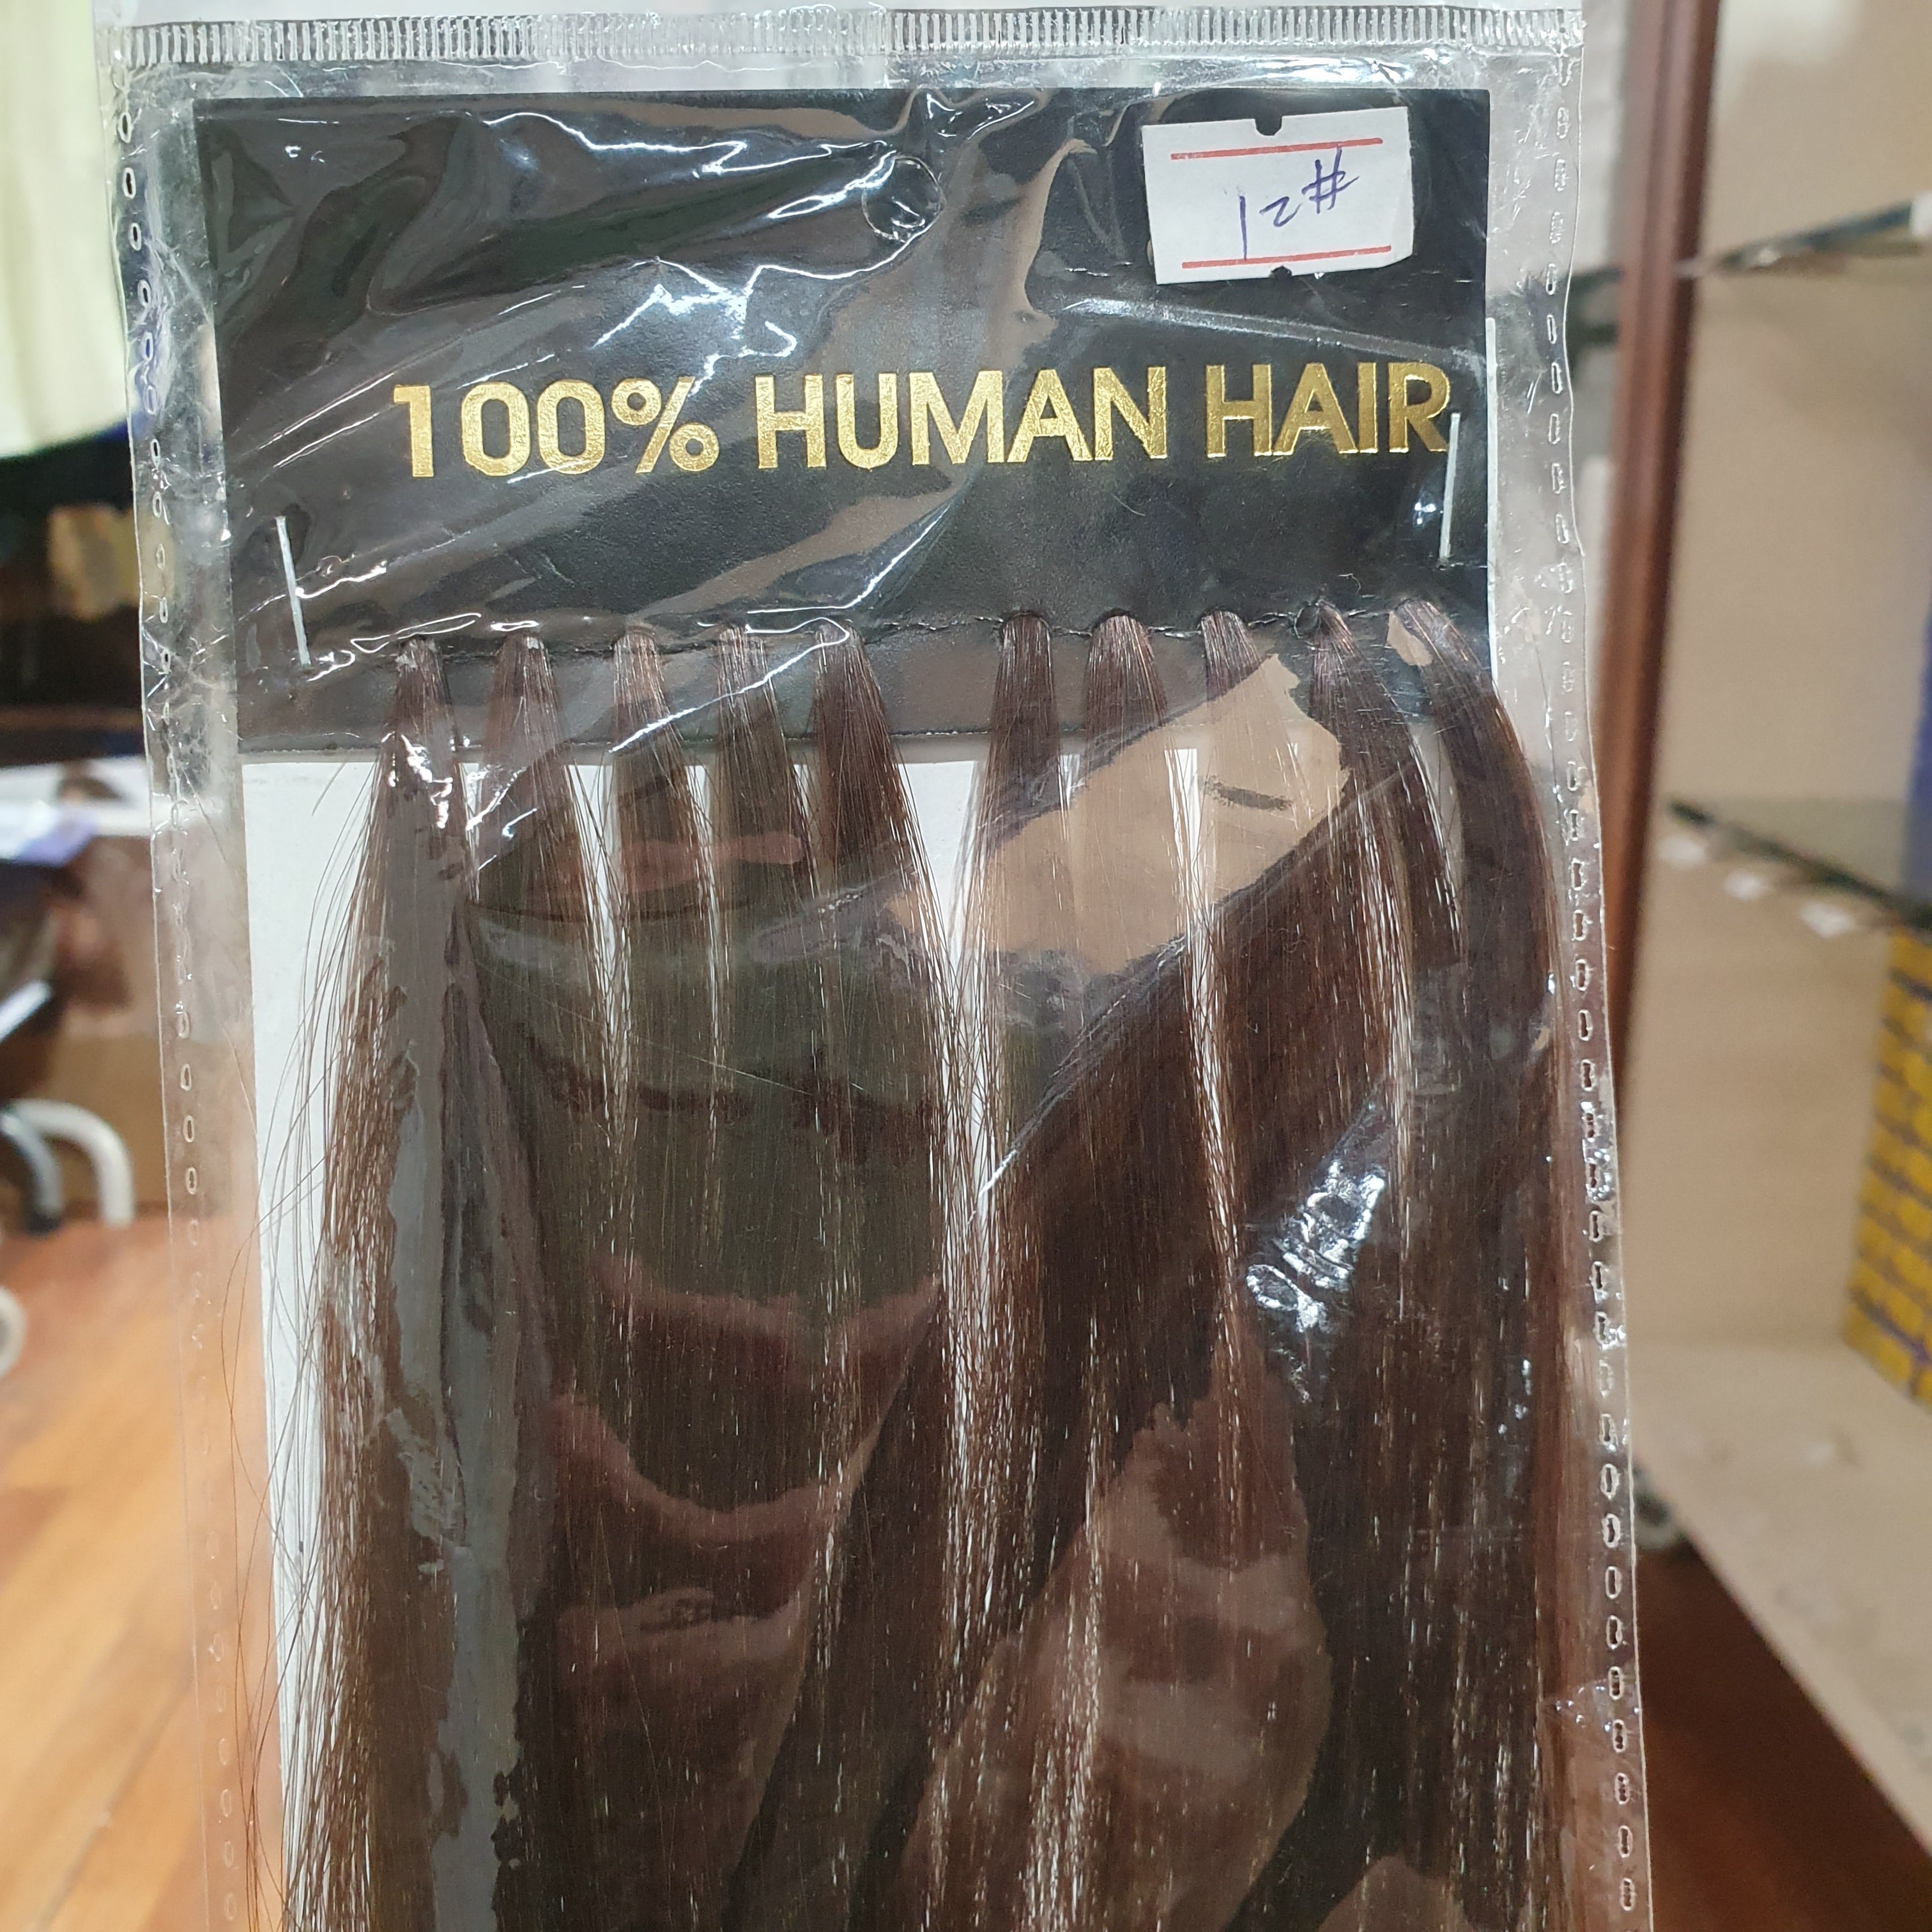 100% HUMAN HAIR EXTENSION 10/PKG